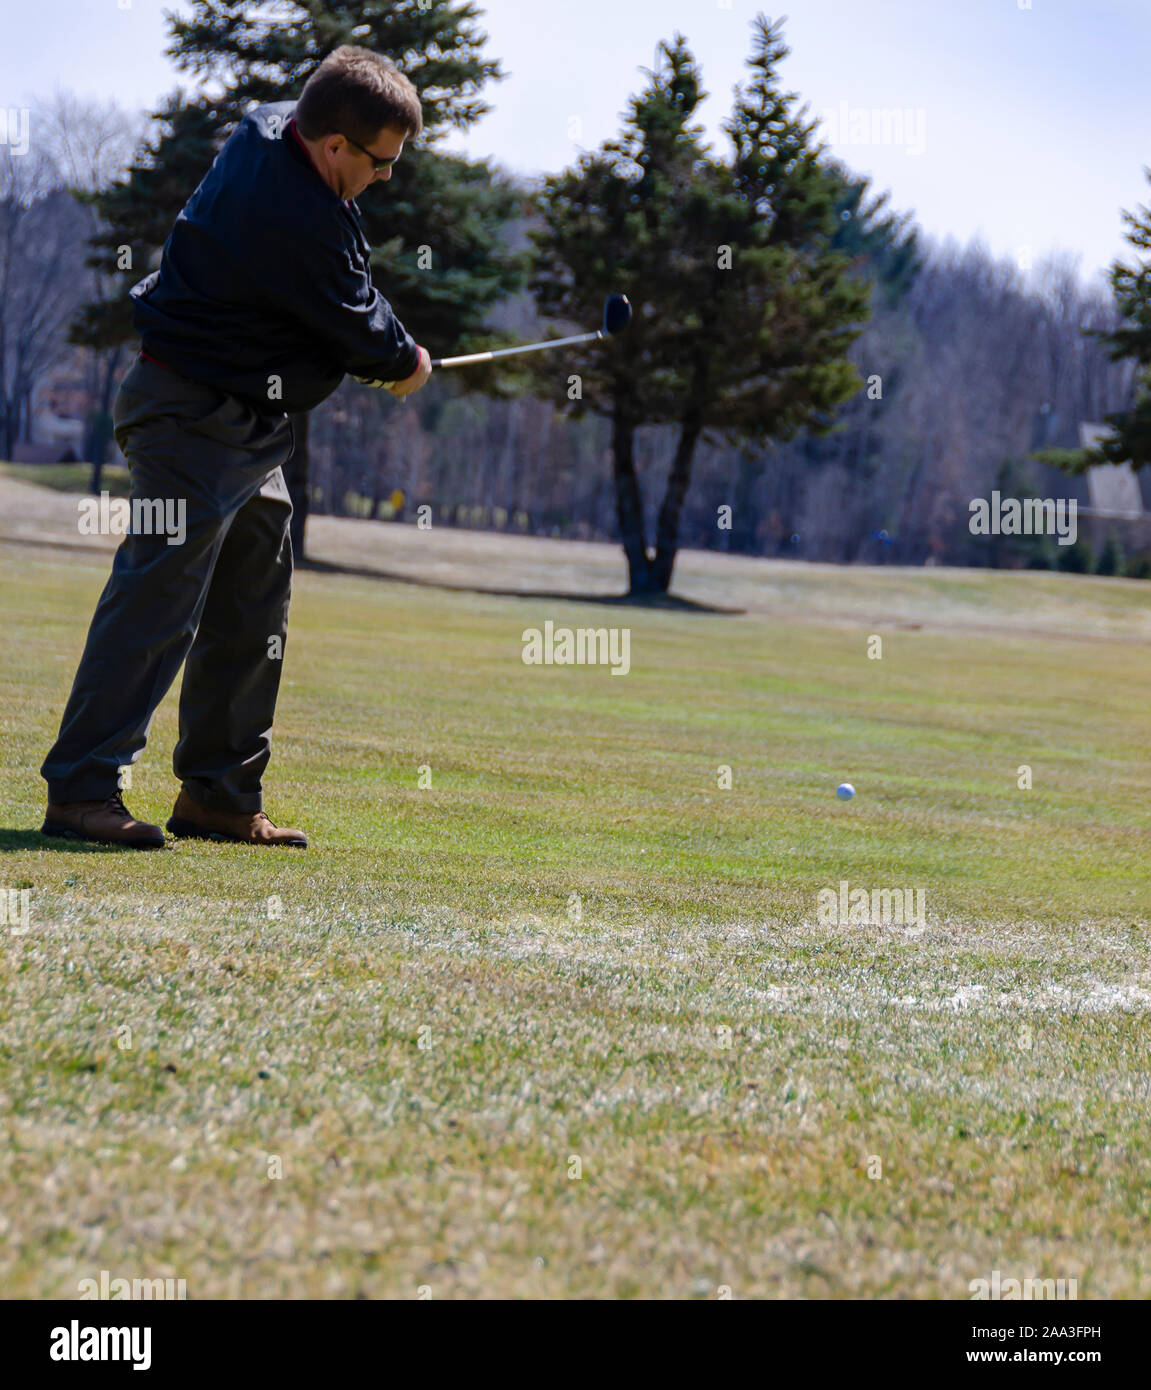 A golfer hitting a golf ball on the fairway with a hybrid golf club. Stock Photo